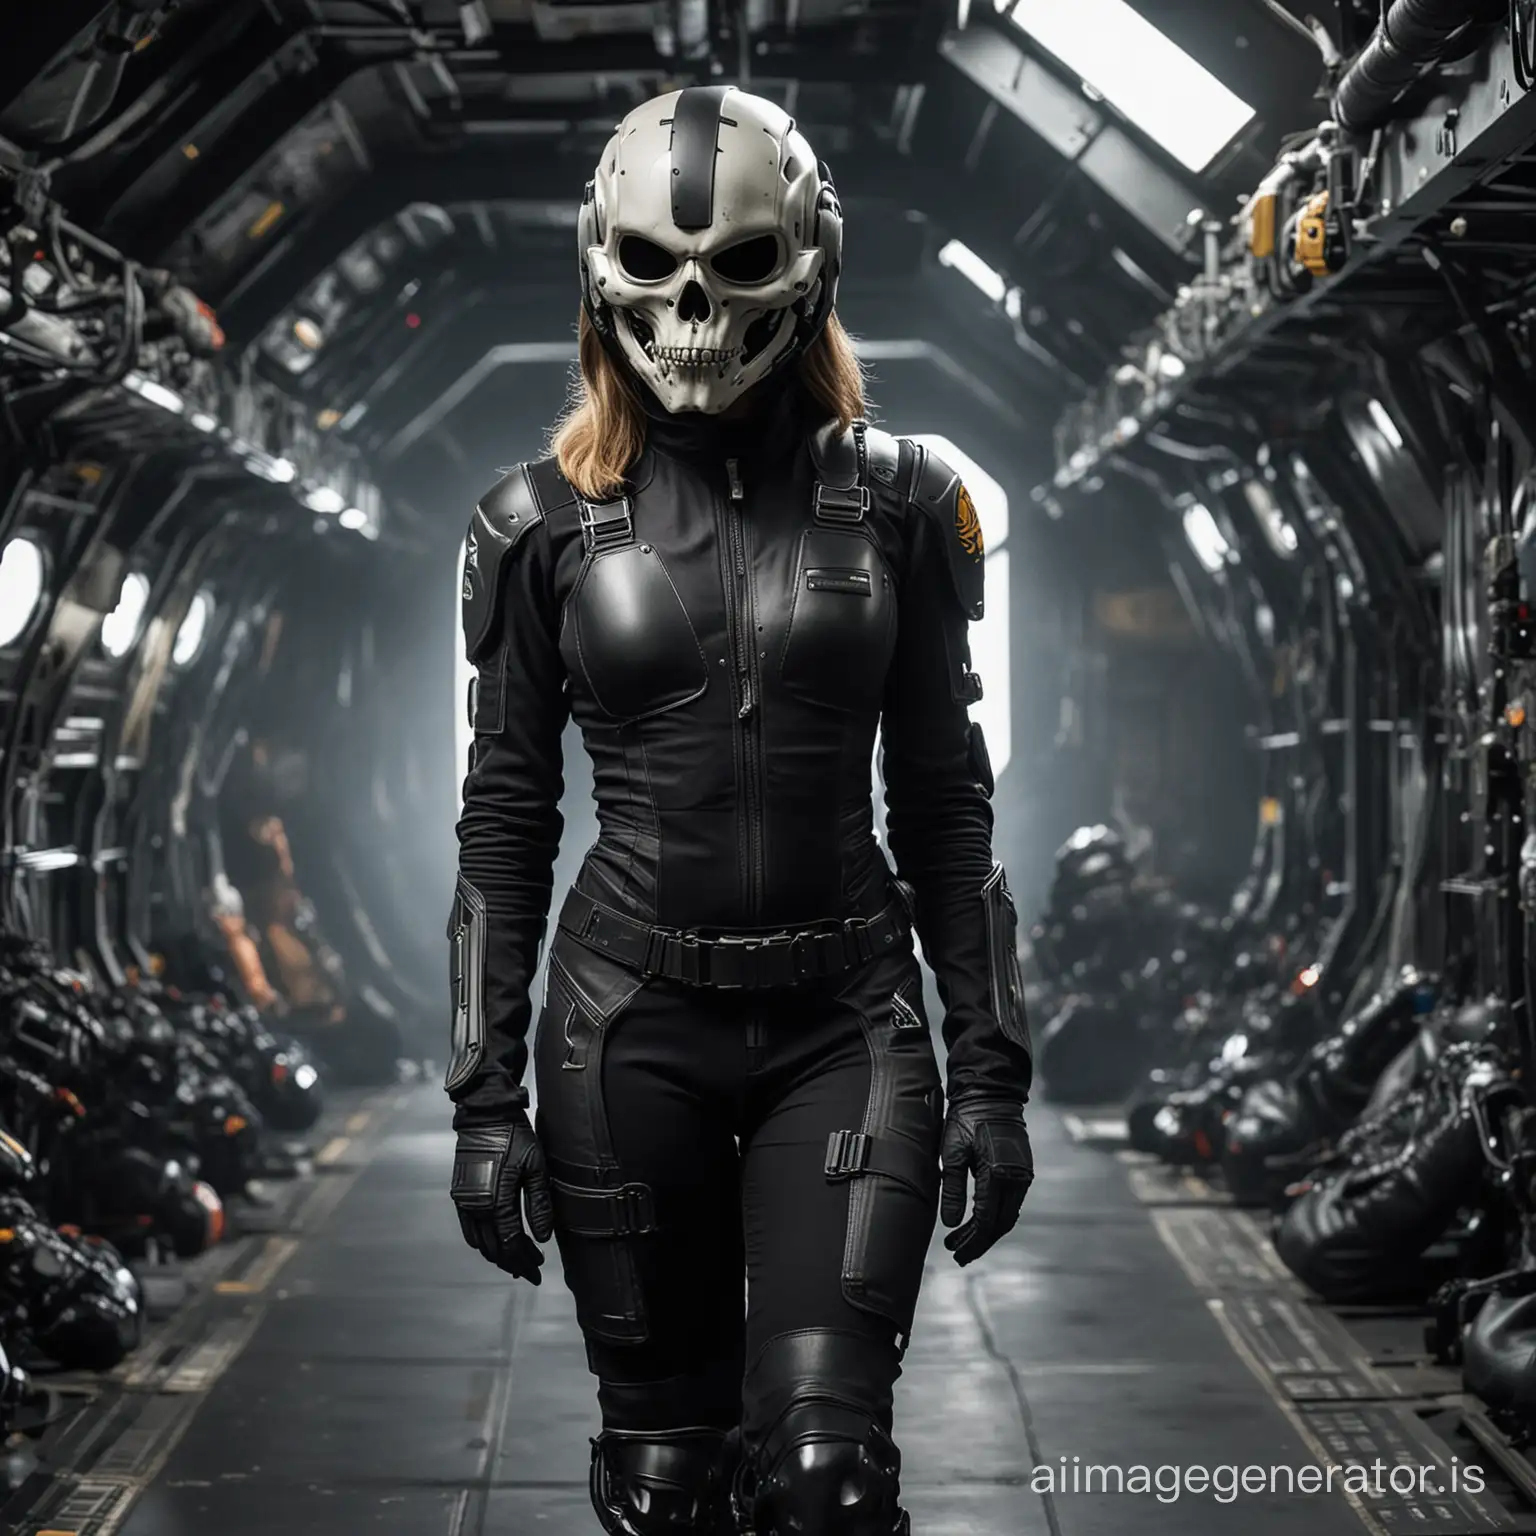 Black-Tight-Flight-Suit-Bounty-Hunter-with-Skull-Helmet-in-Spacecraft-Setting